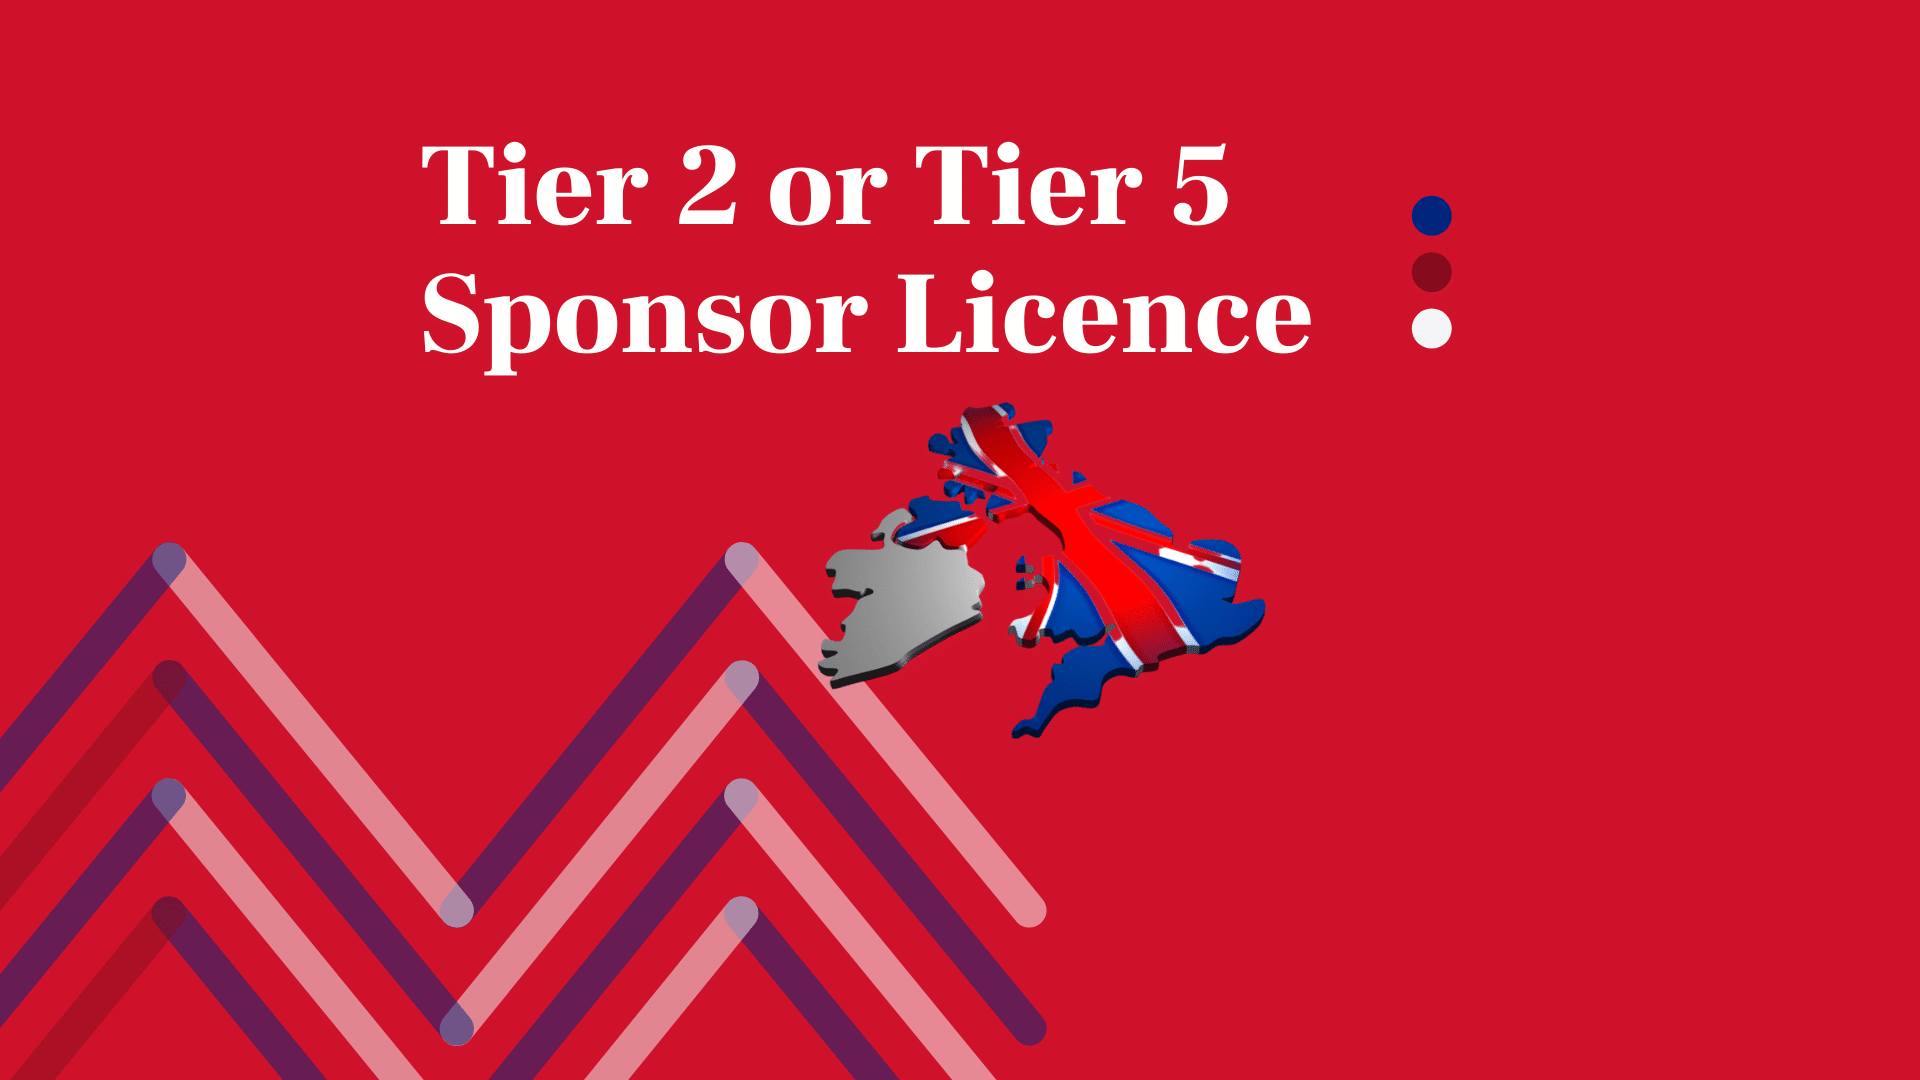 Tier 2 or Tier 5 Sponsor Licence